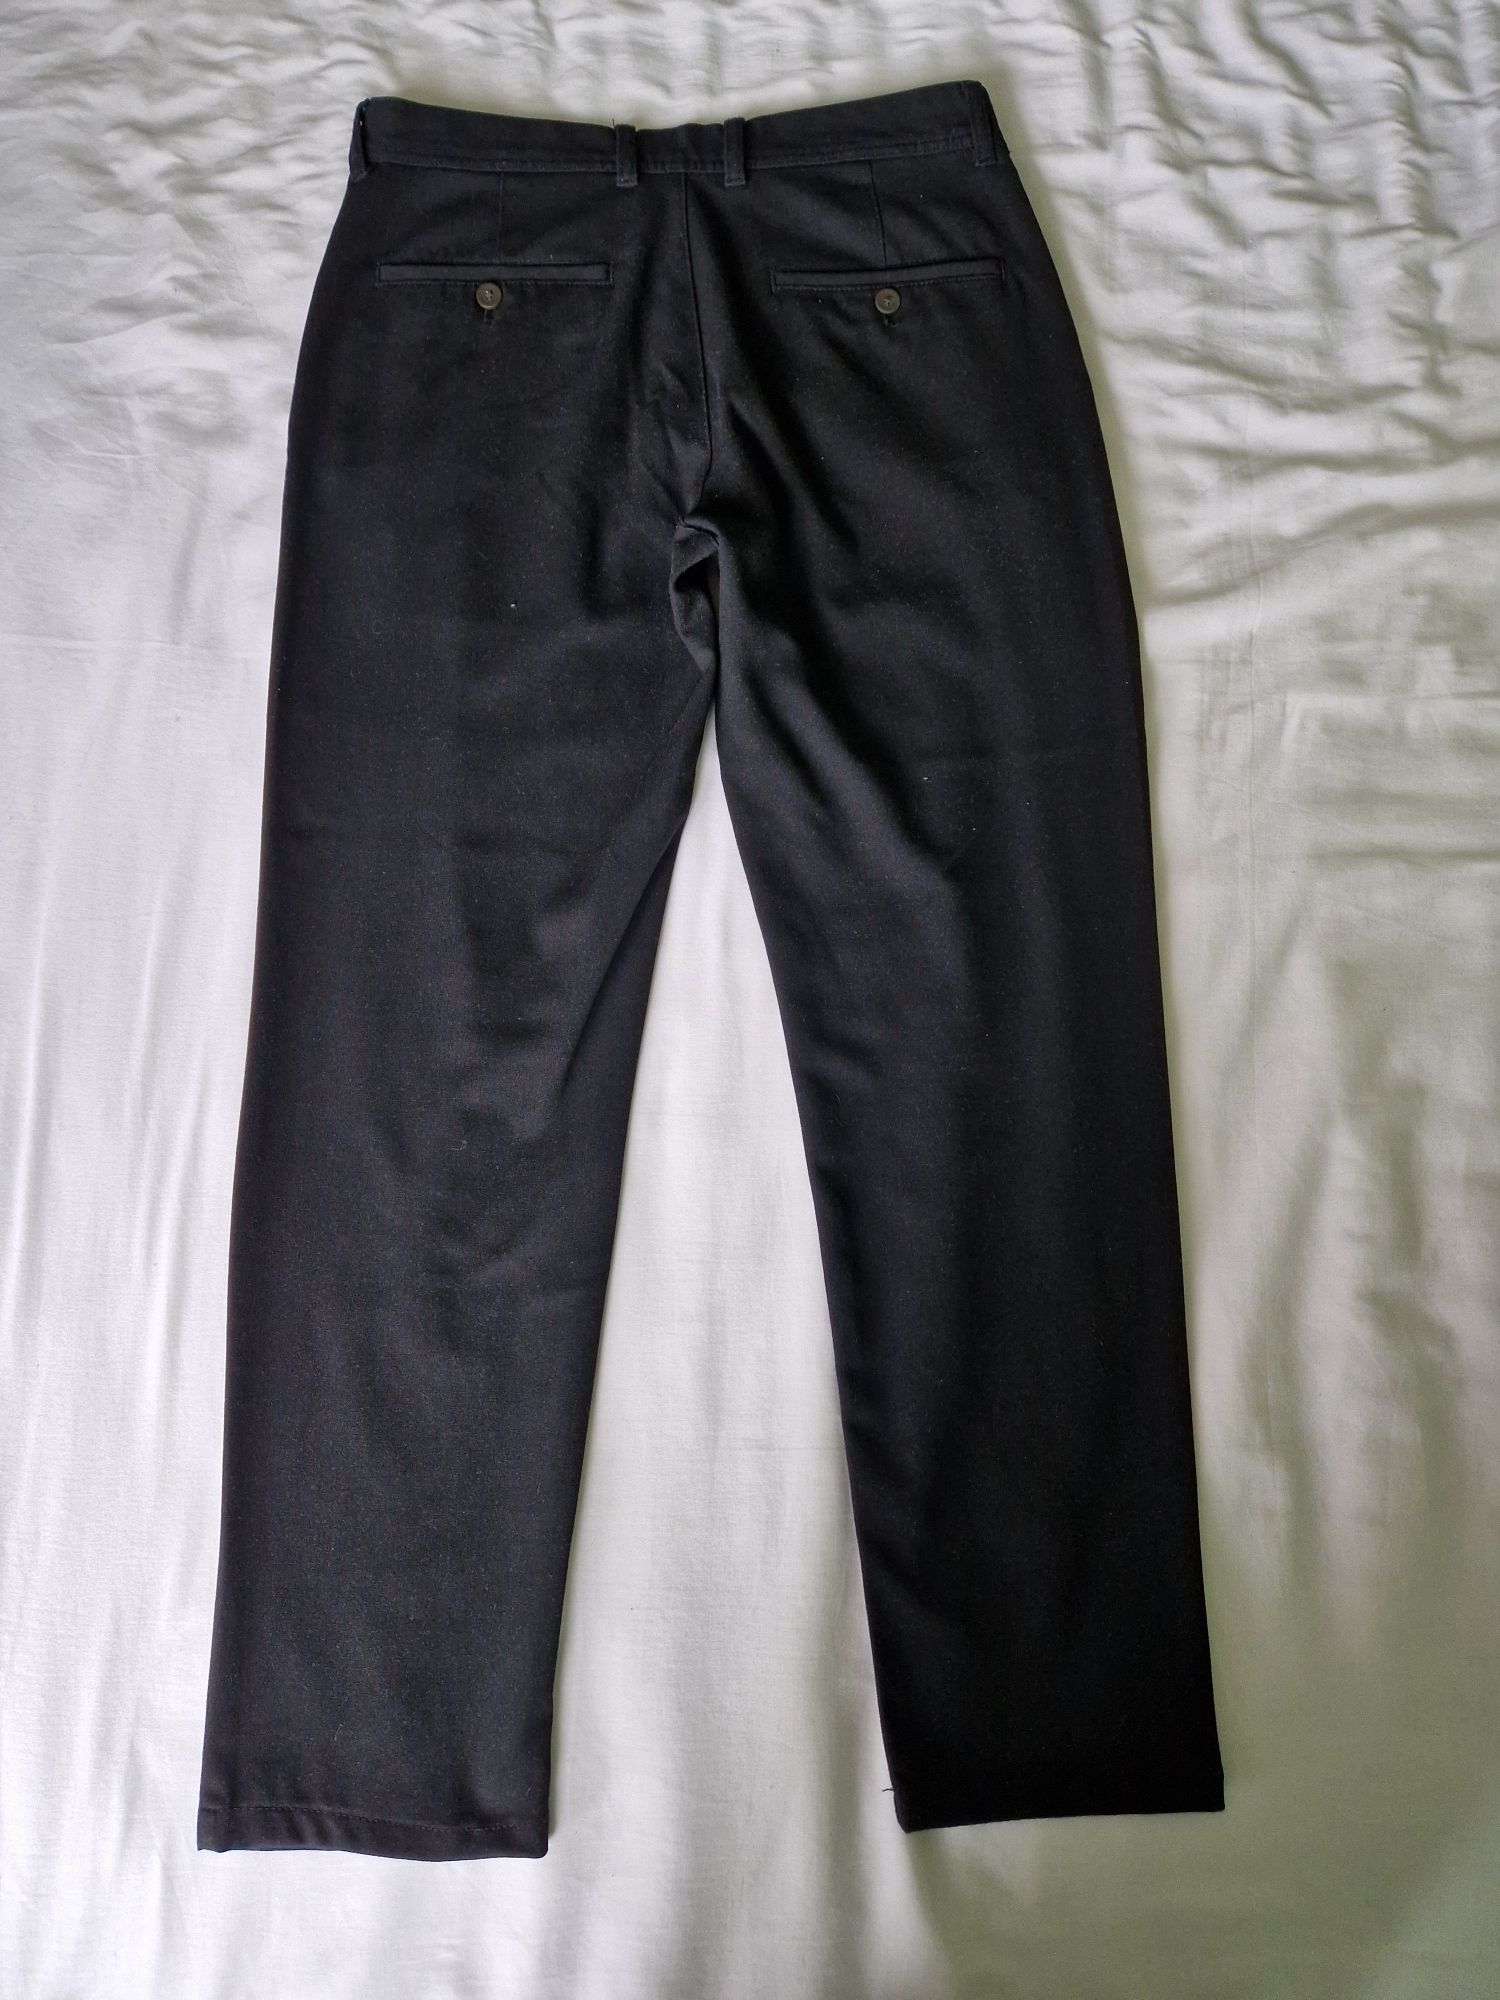 Spodnie męskie czarne eleganckie Zara r. M